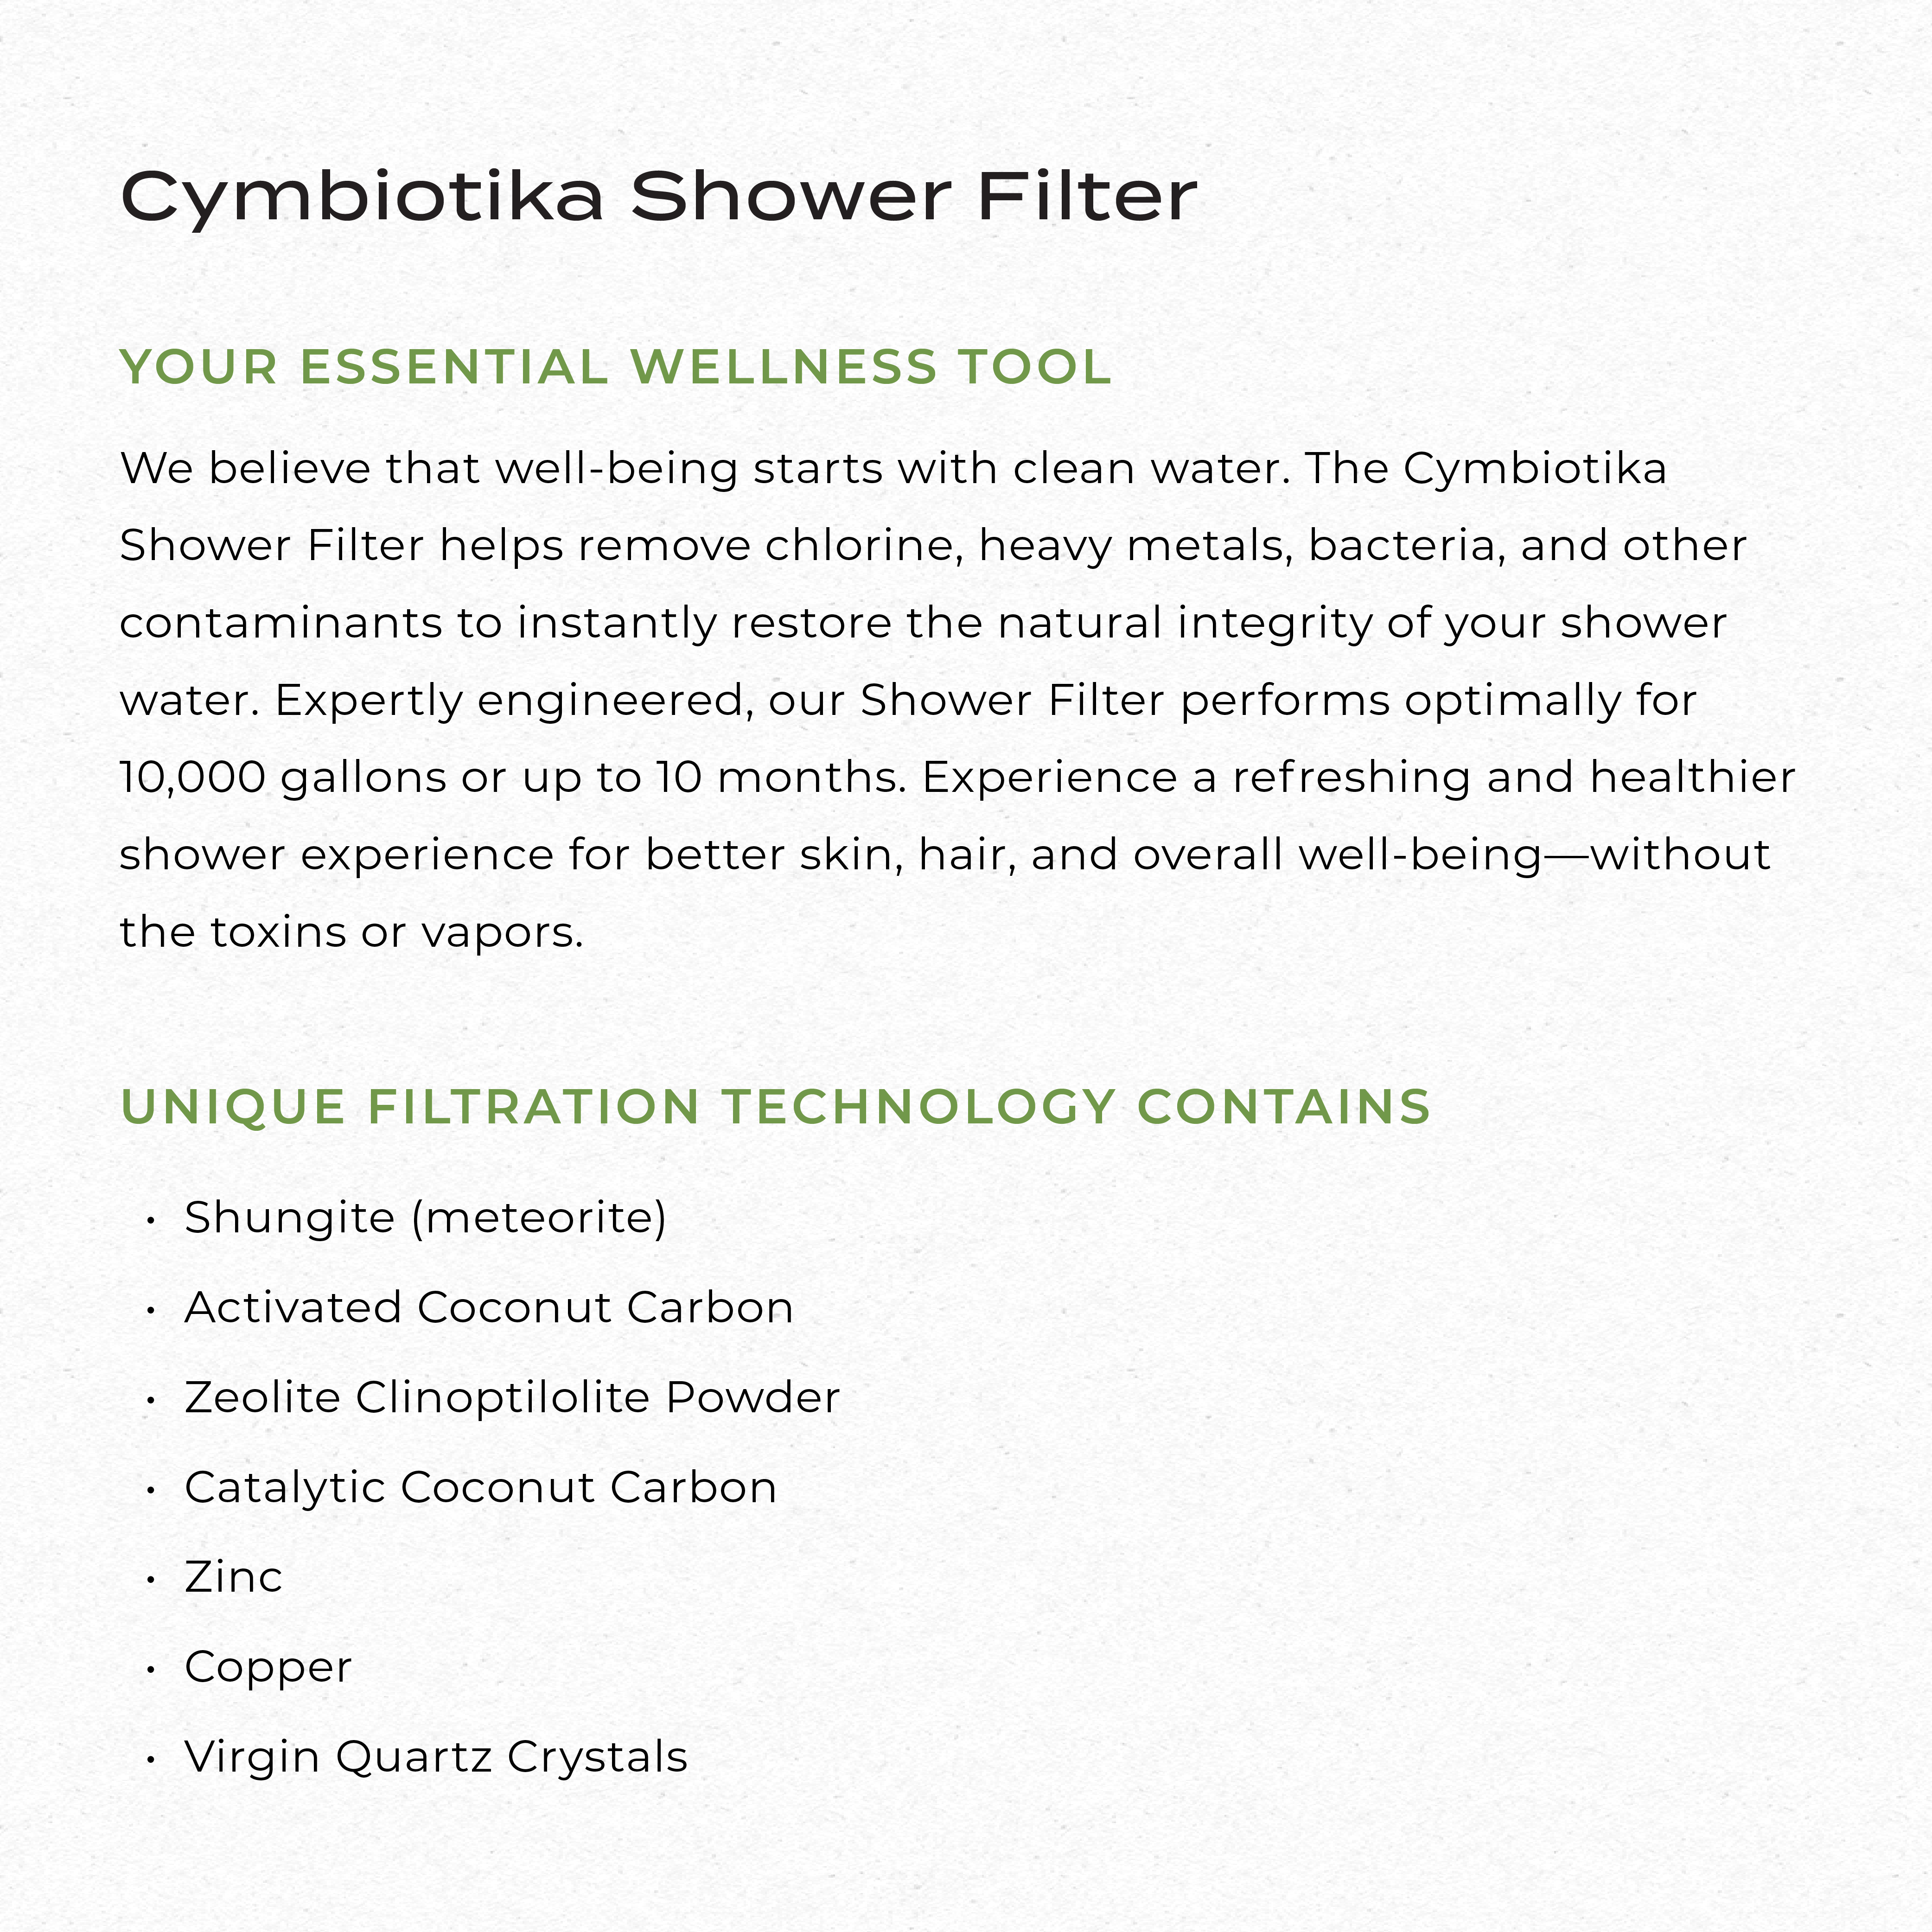 Cymbiotika Shower Filter Explanation Graphic